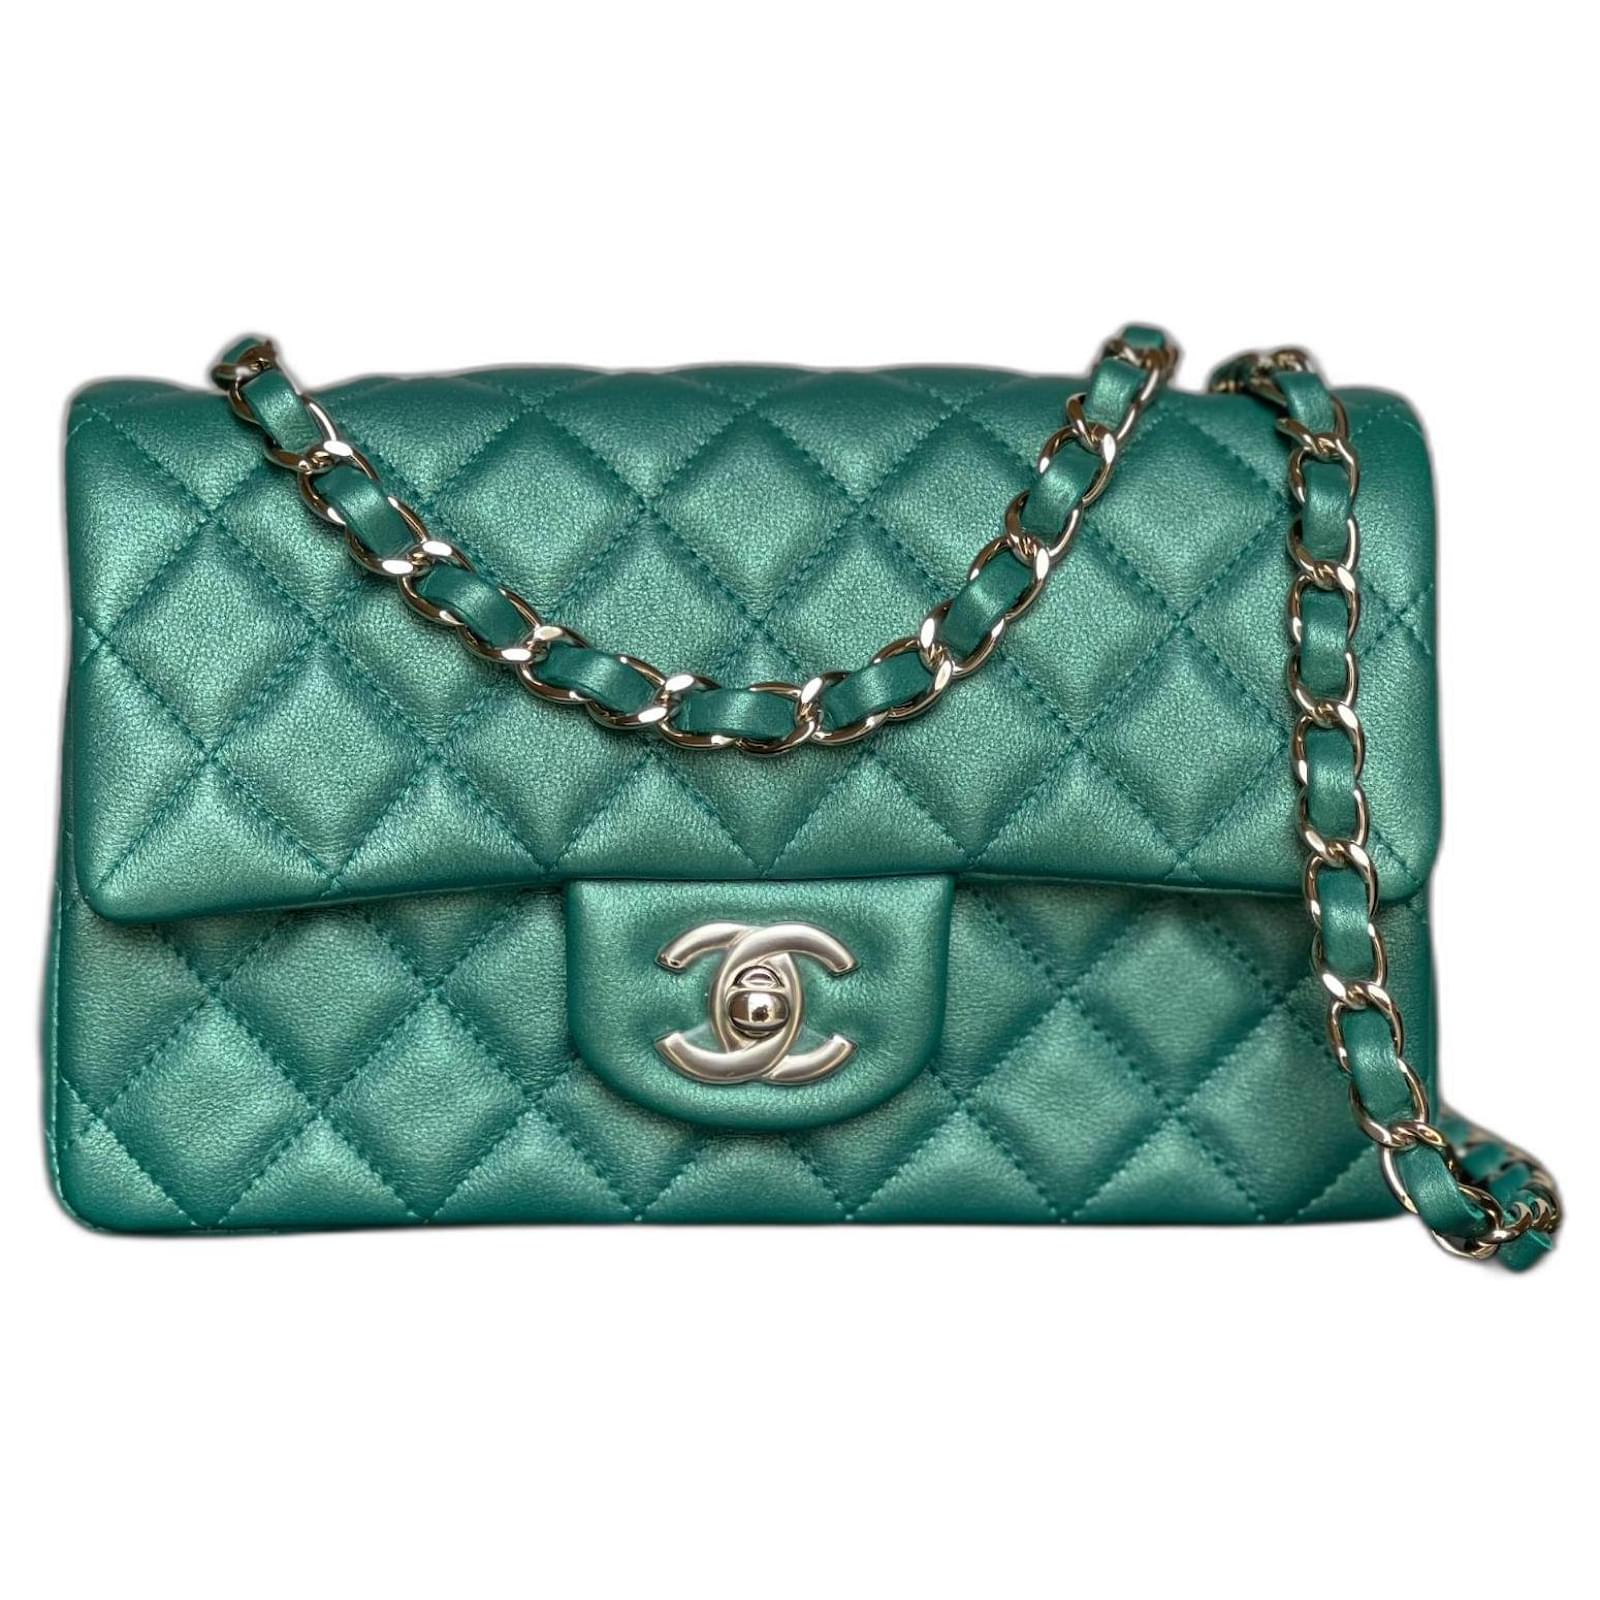 Handbags Chanel Iridescent Green Lambskin Mini Flap Handbag